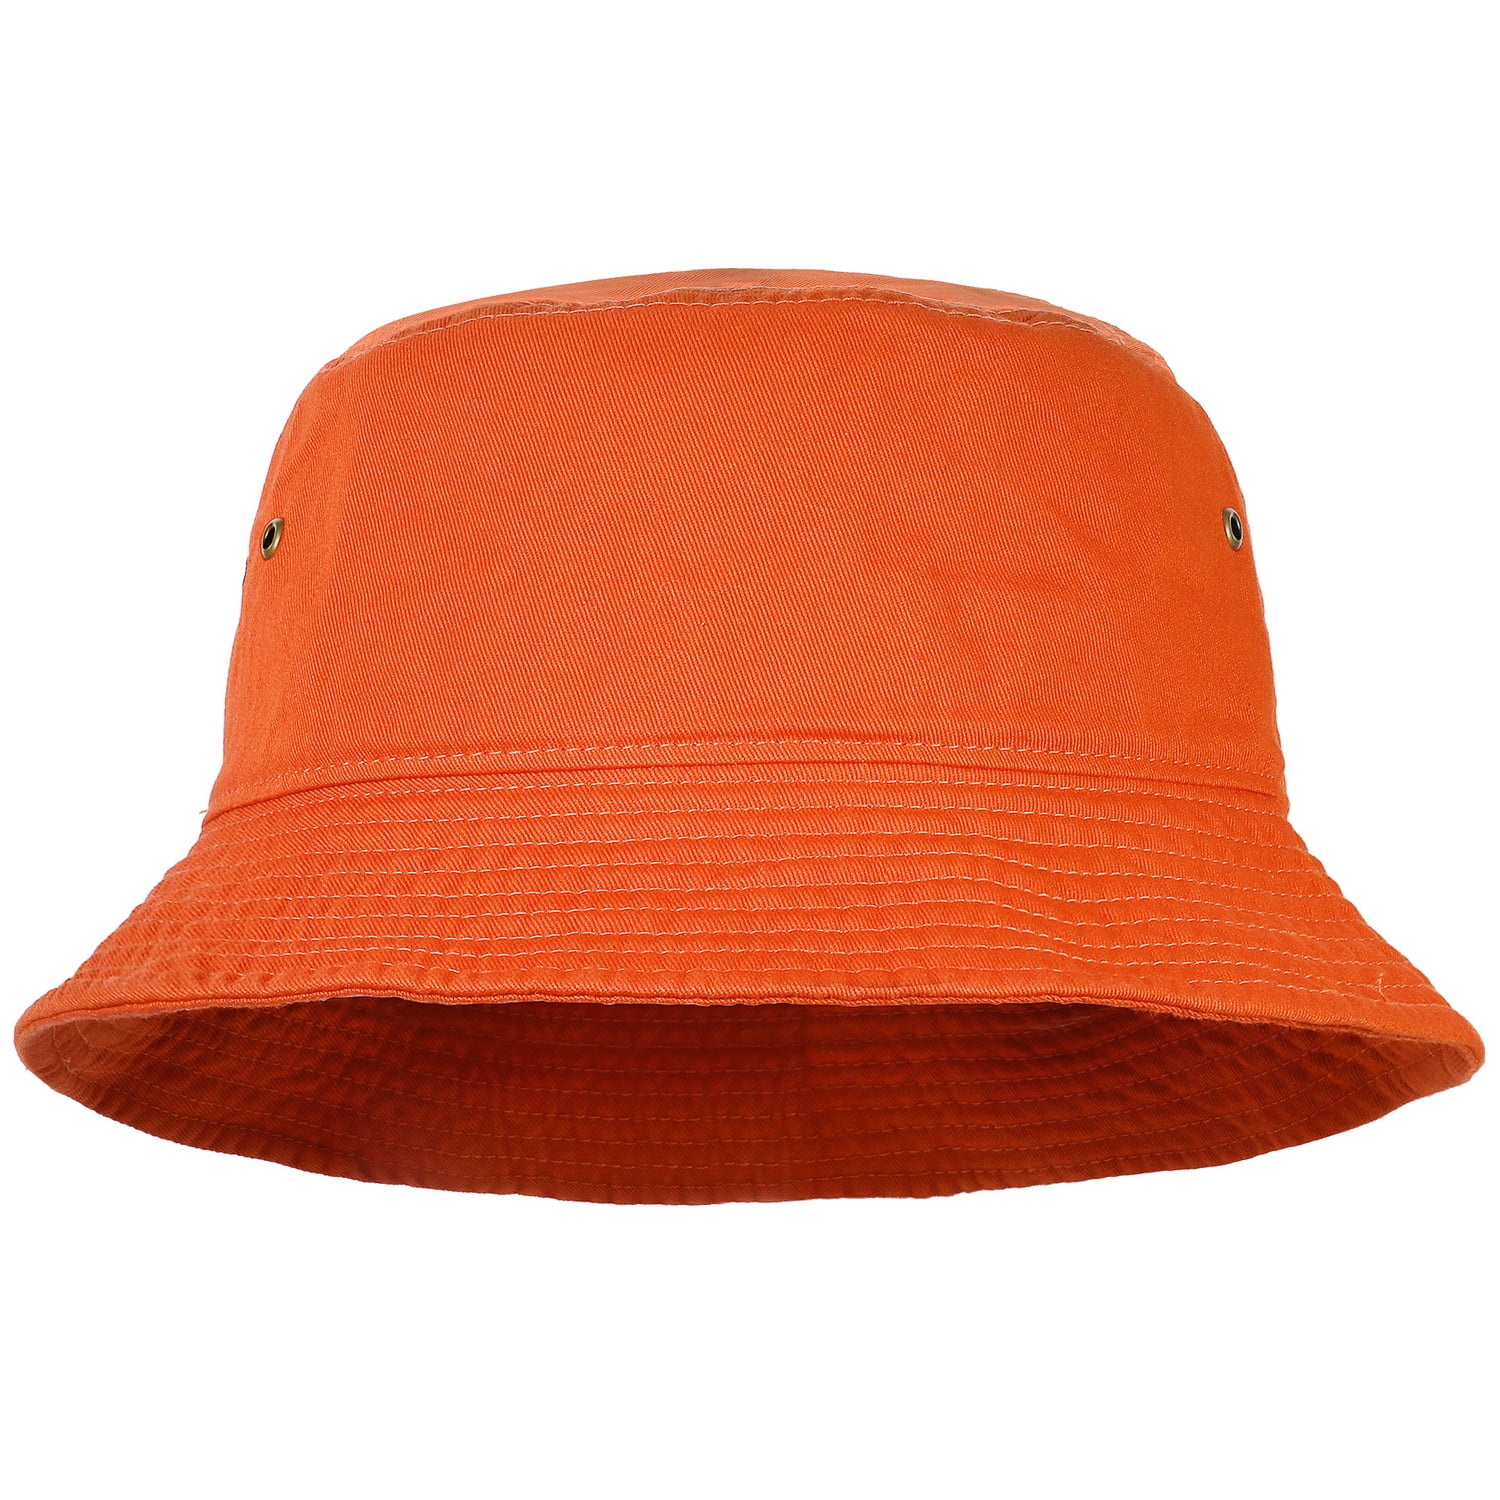 Bucket Hat for Men Women Unisex 100% Cotton Packable Foldable Summer Travel  Beach Outdoor Fishing Hat - LXL Orange